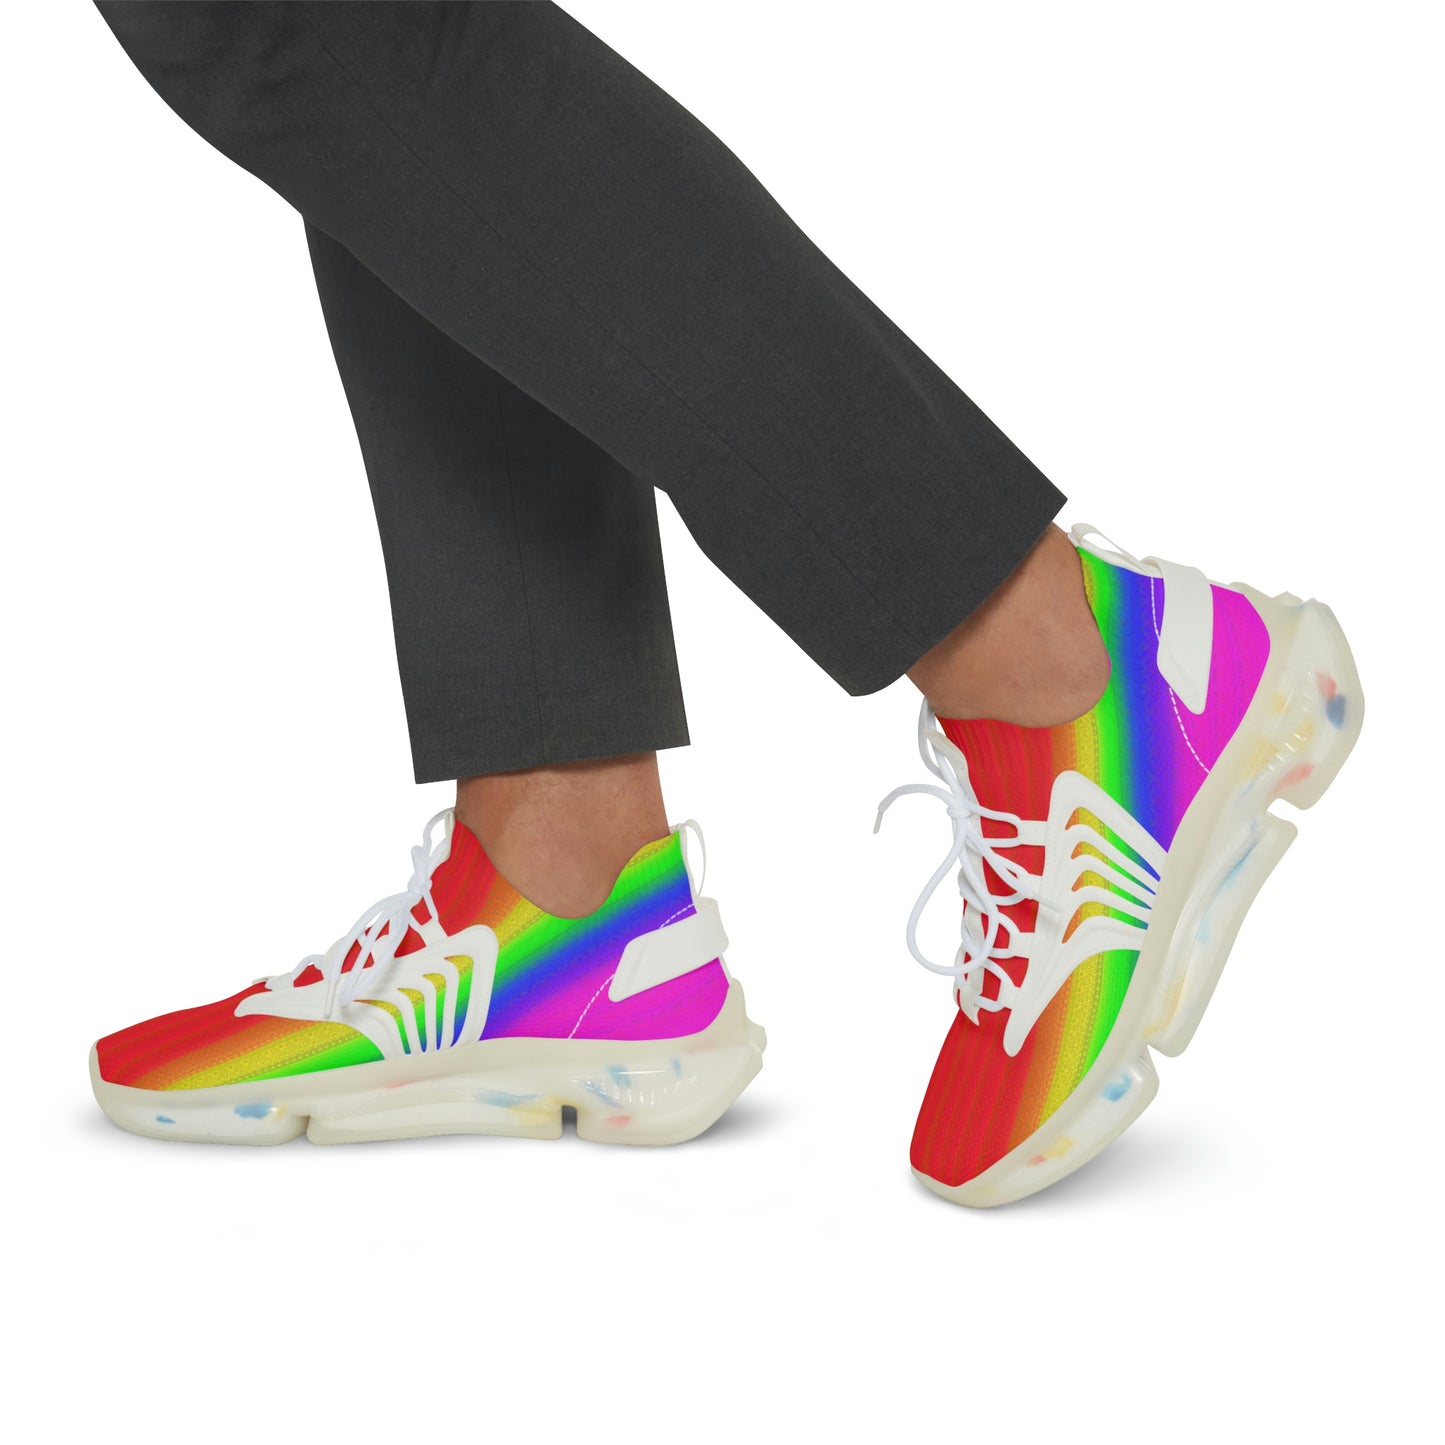 Men's Space Daddy Rainbow Nova Mesh Athletic Sneakers